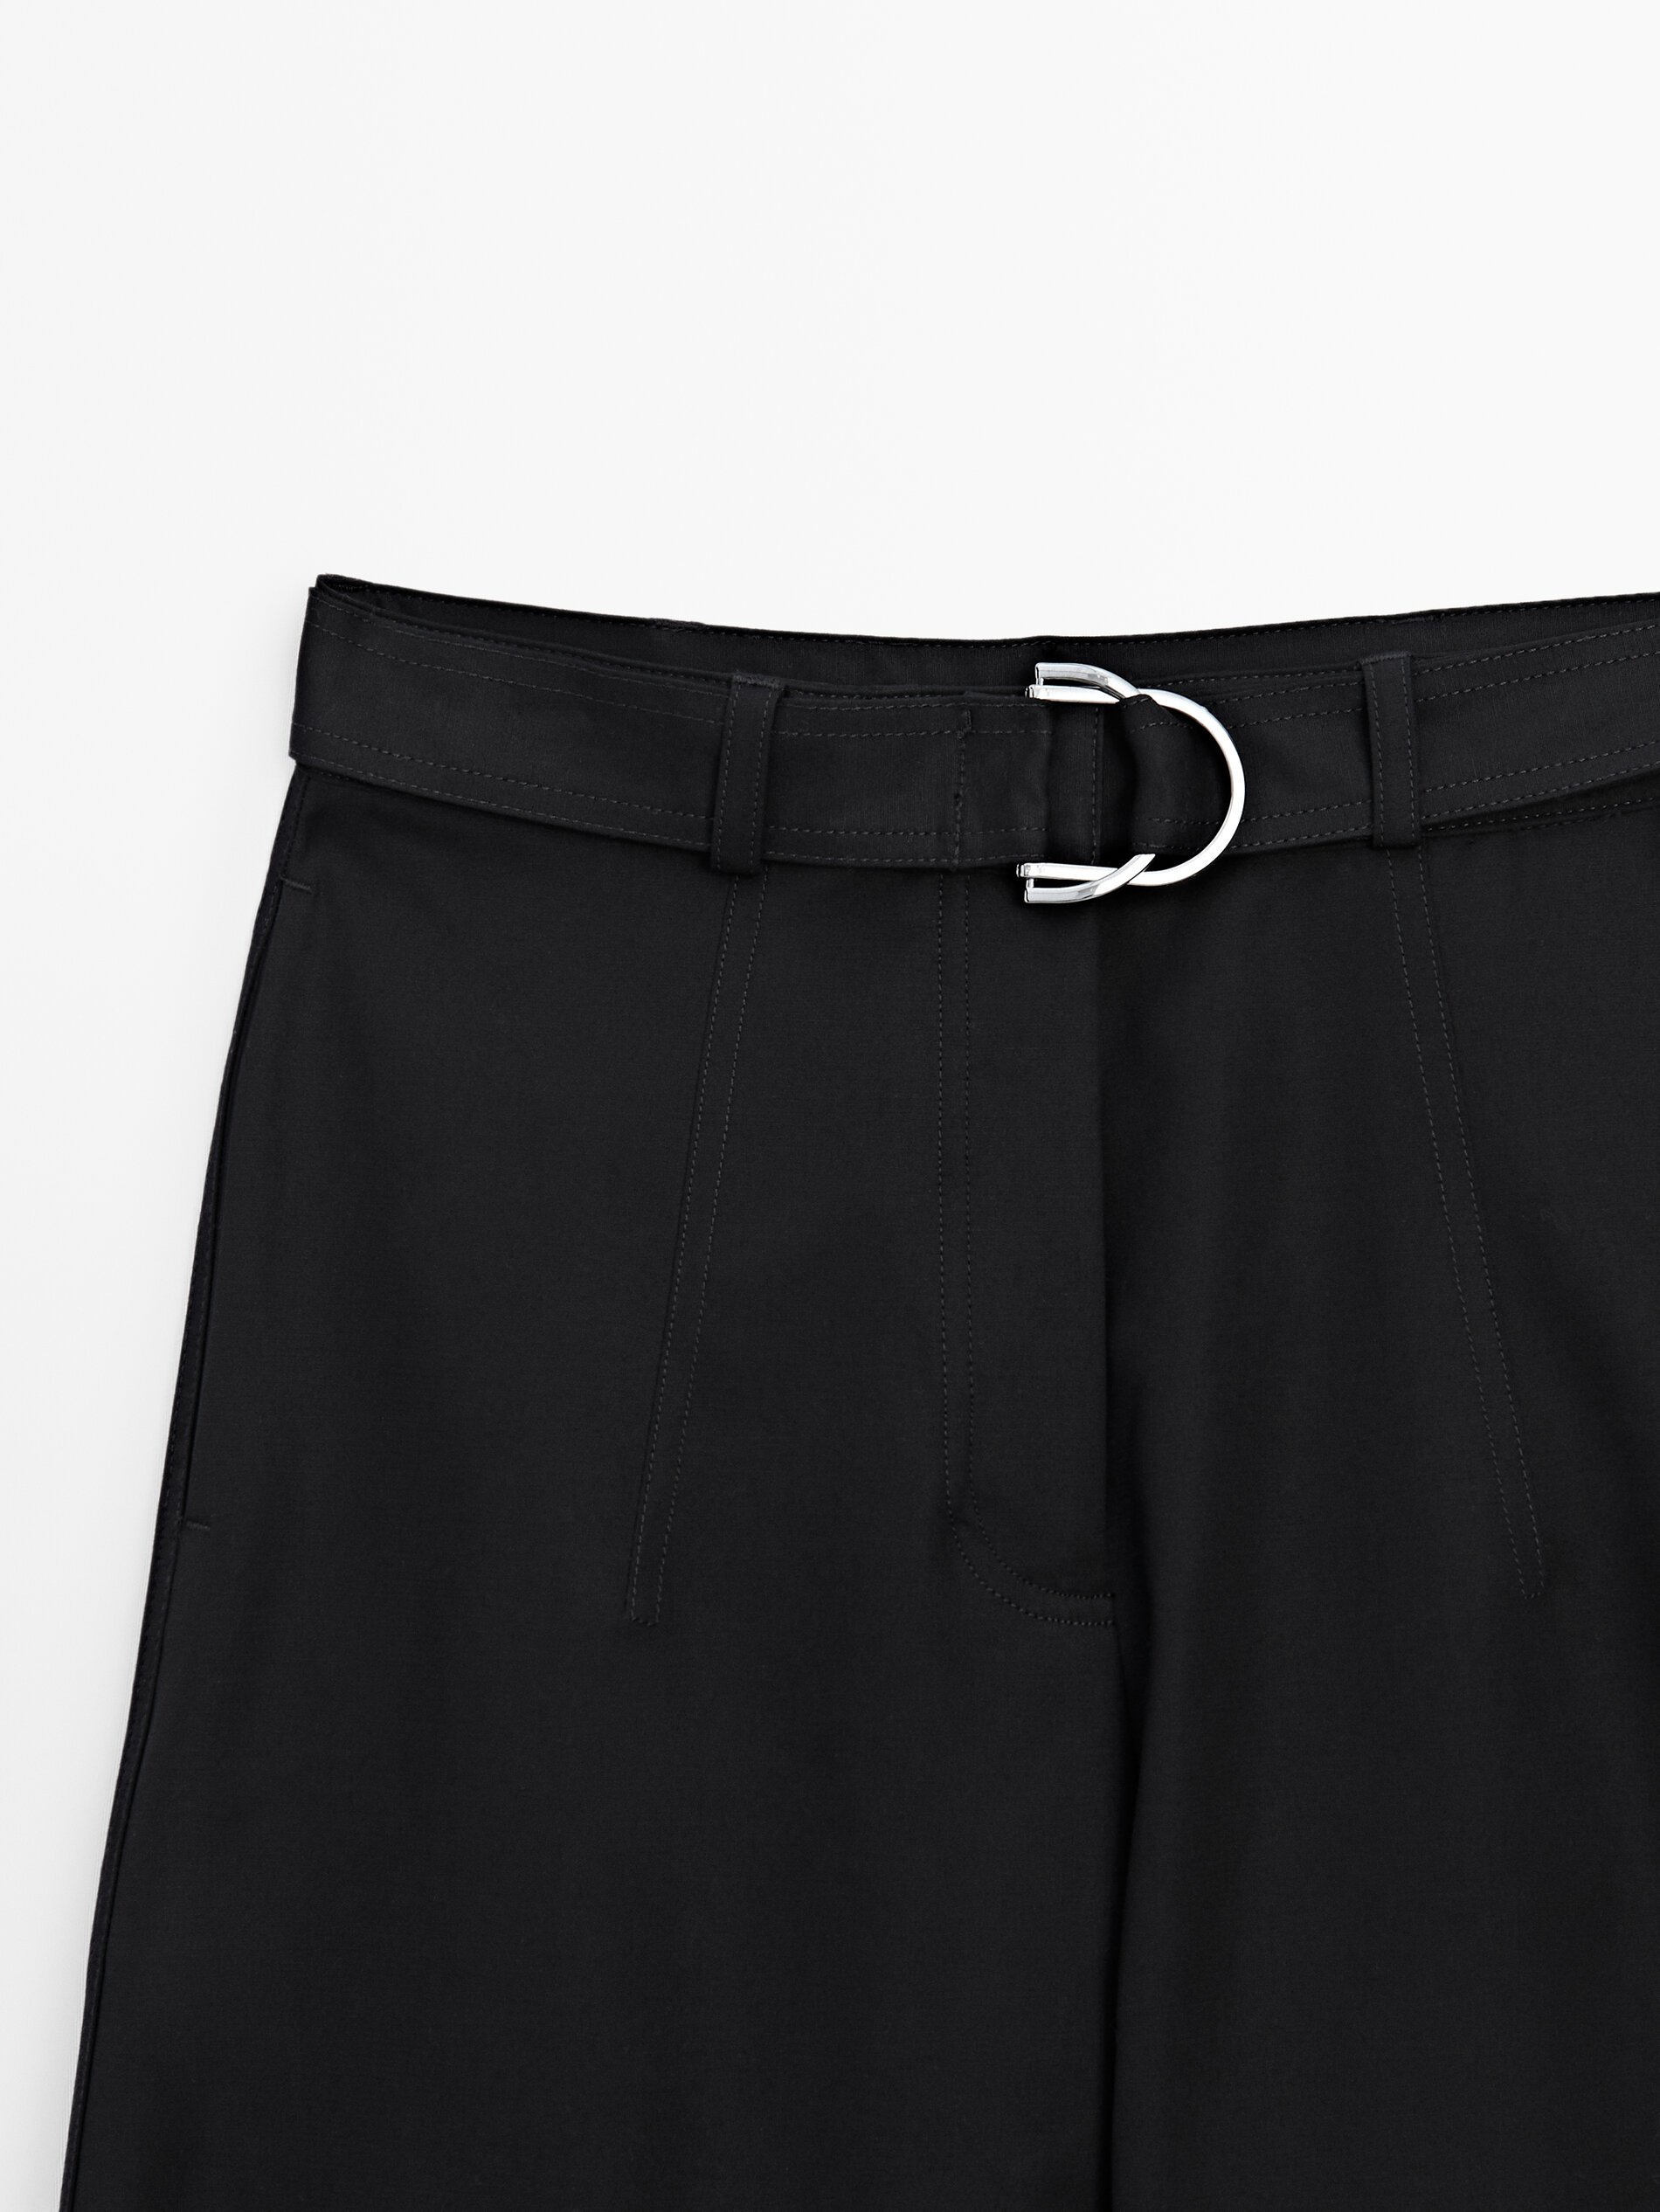 Black barrel-fit trousers with belt · Black · Dressy | Massimo Dutti